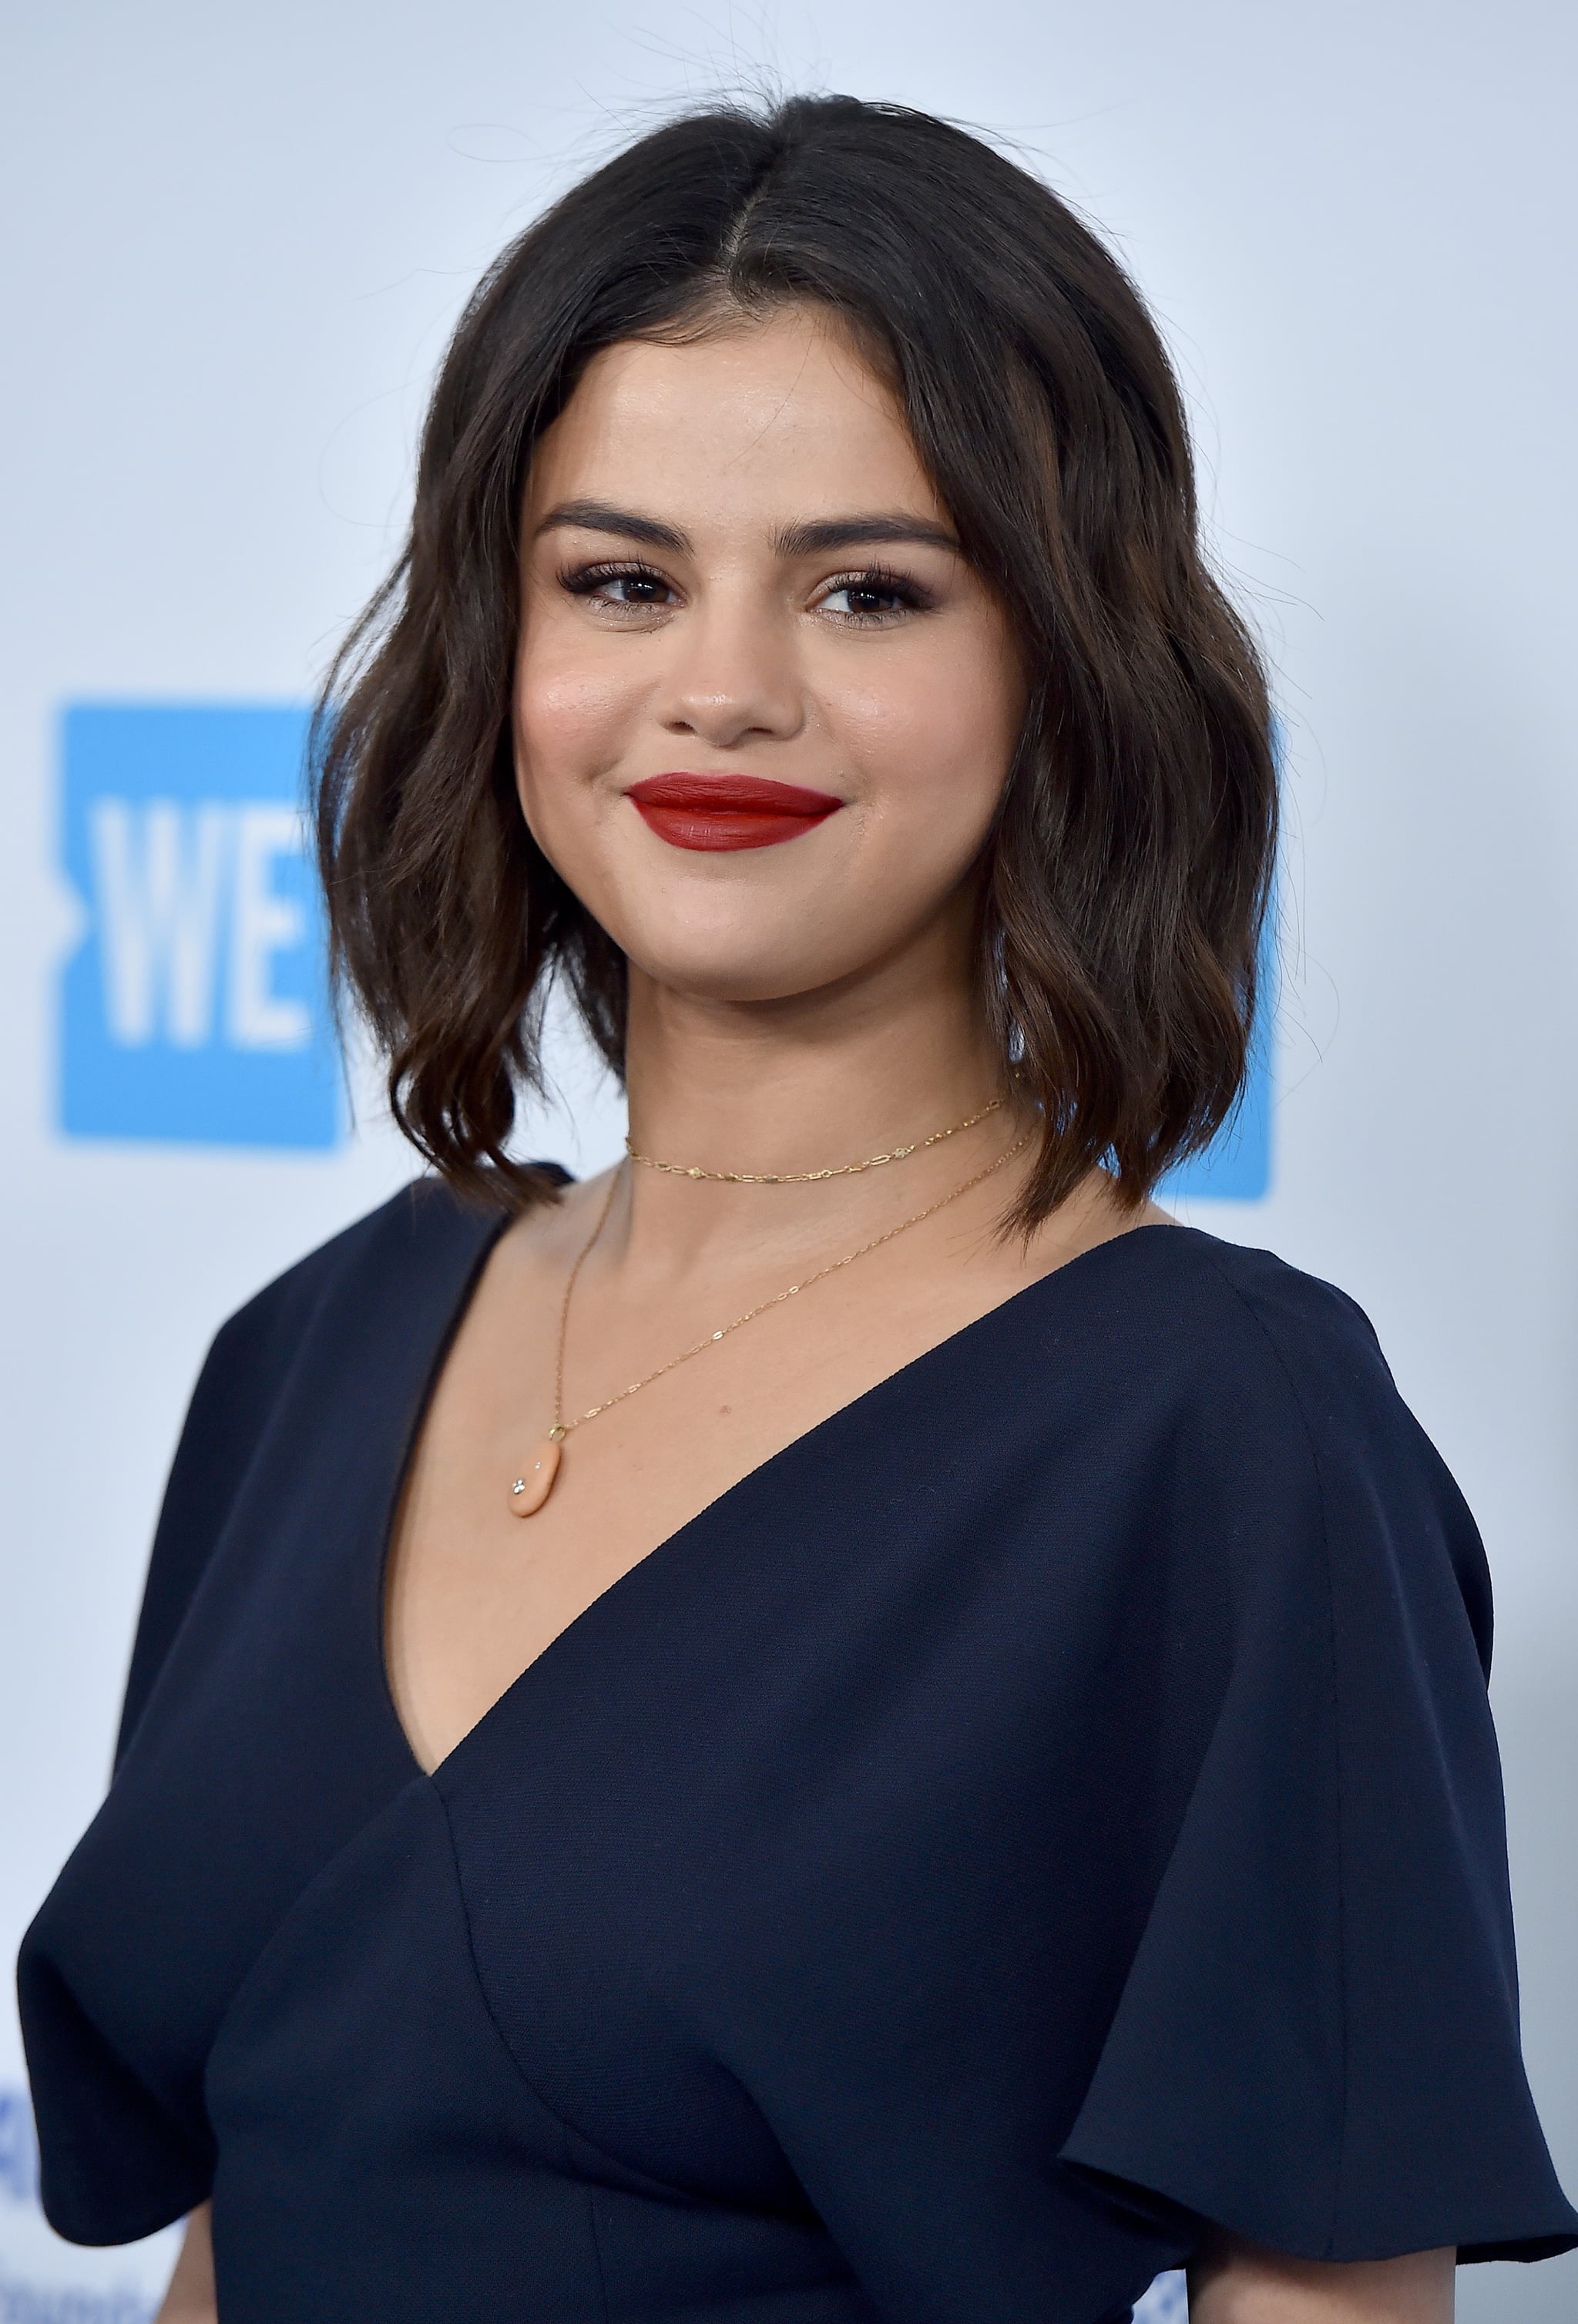 2020: Selena Gomez